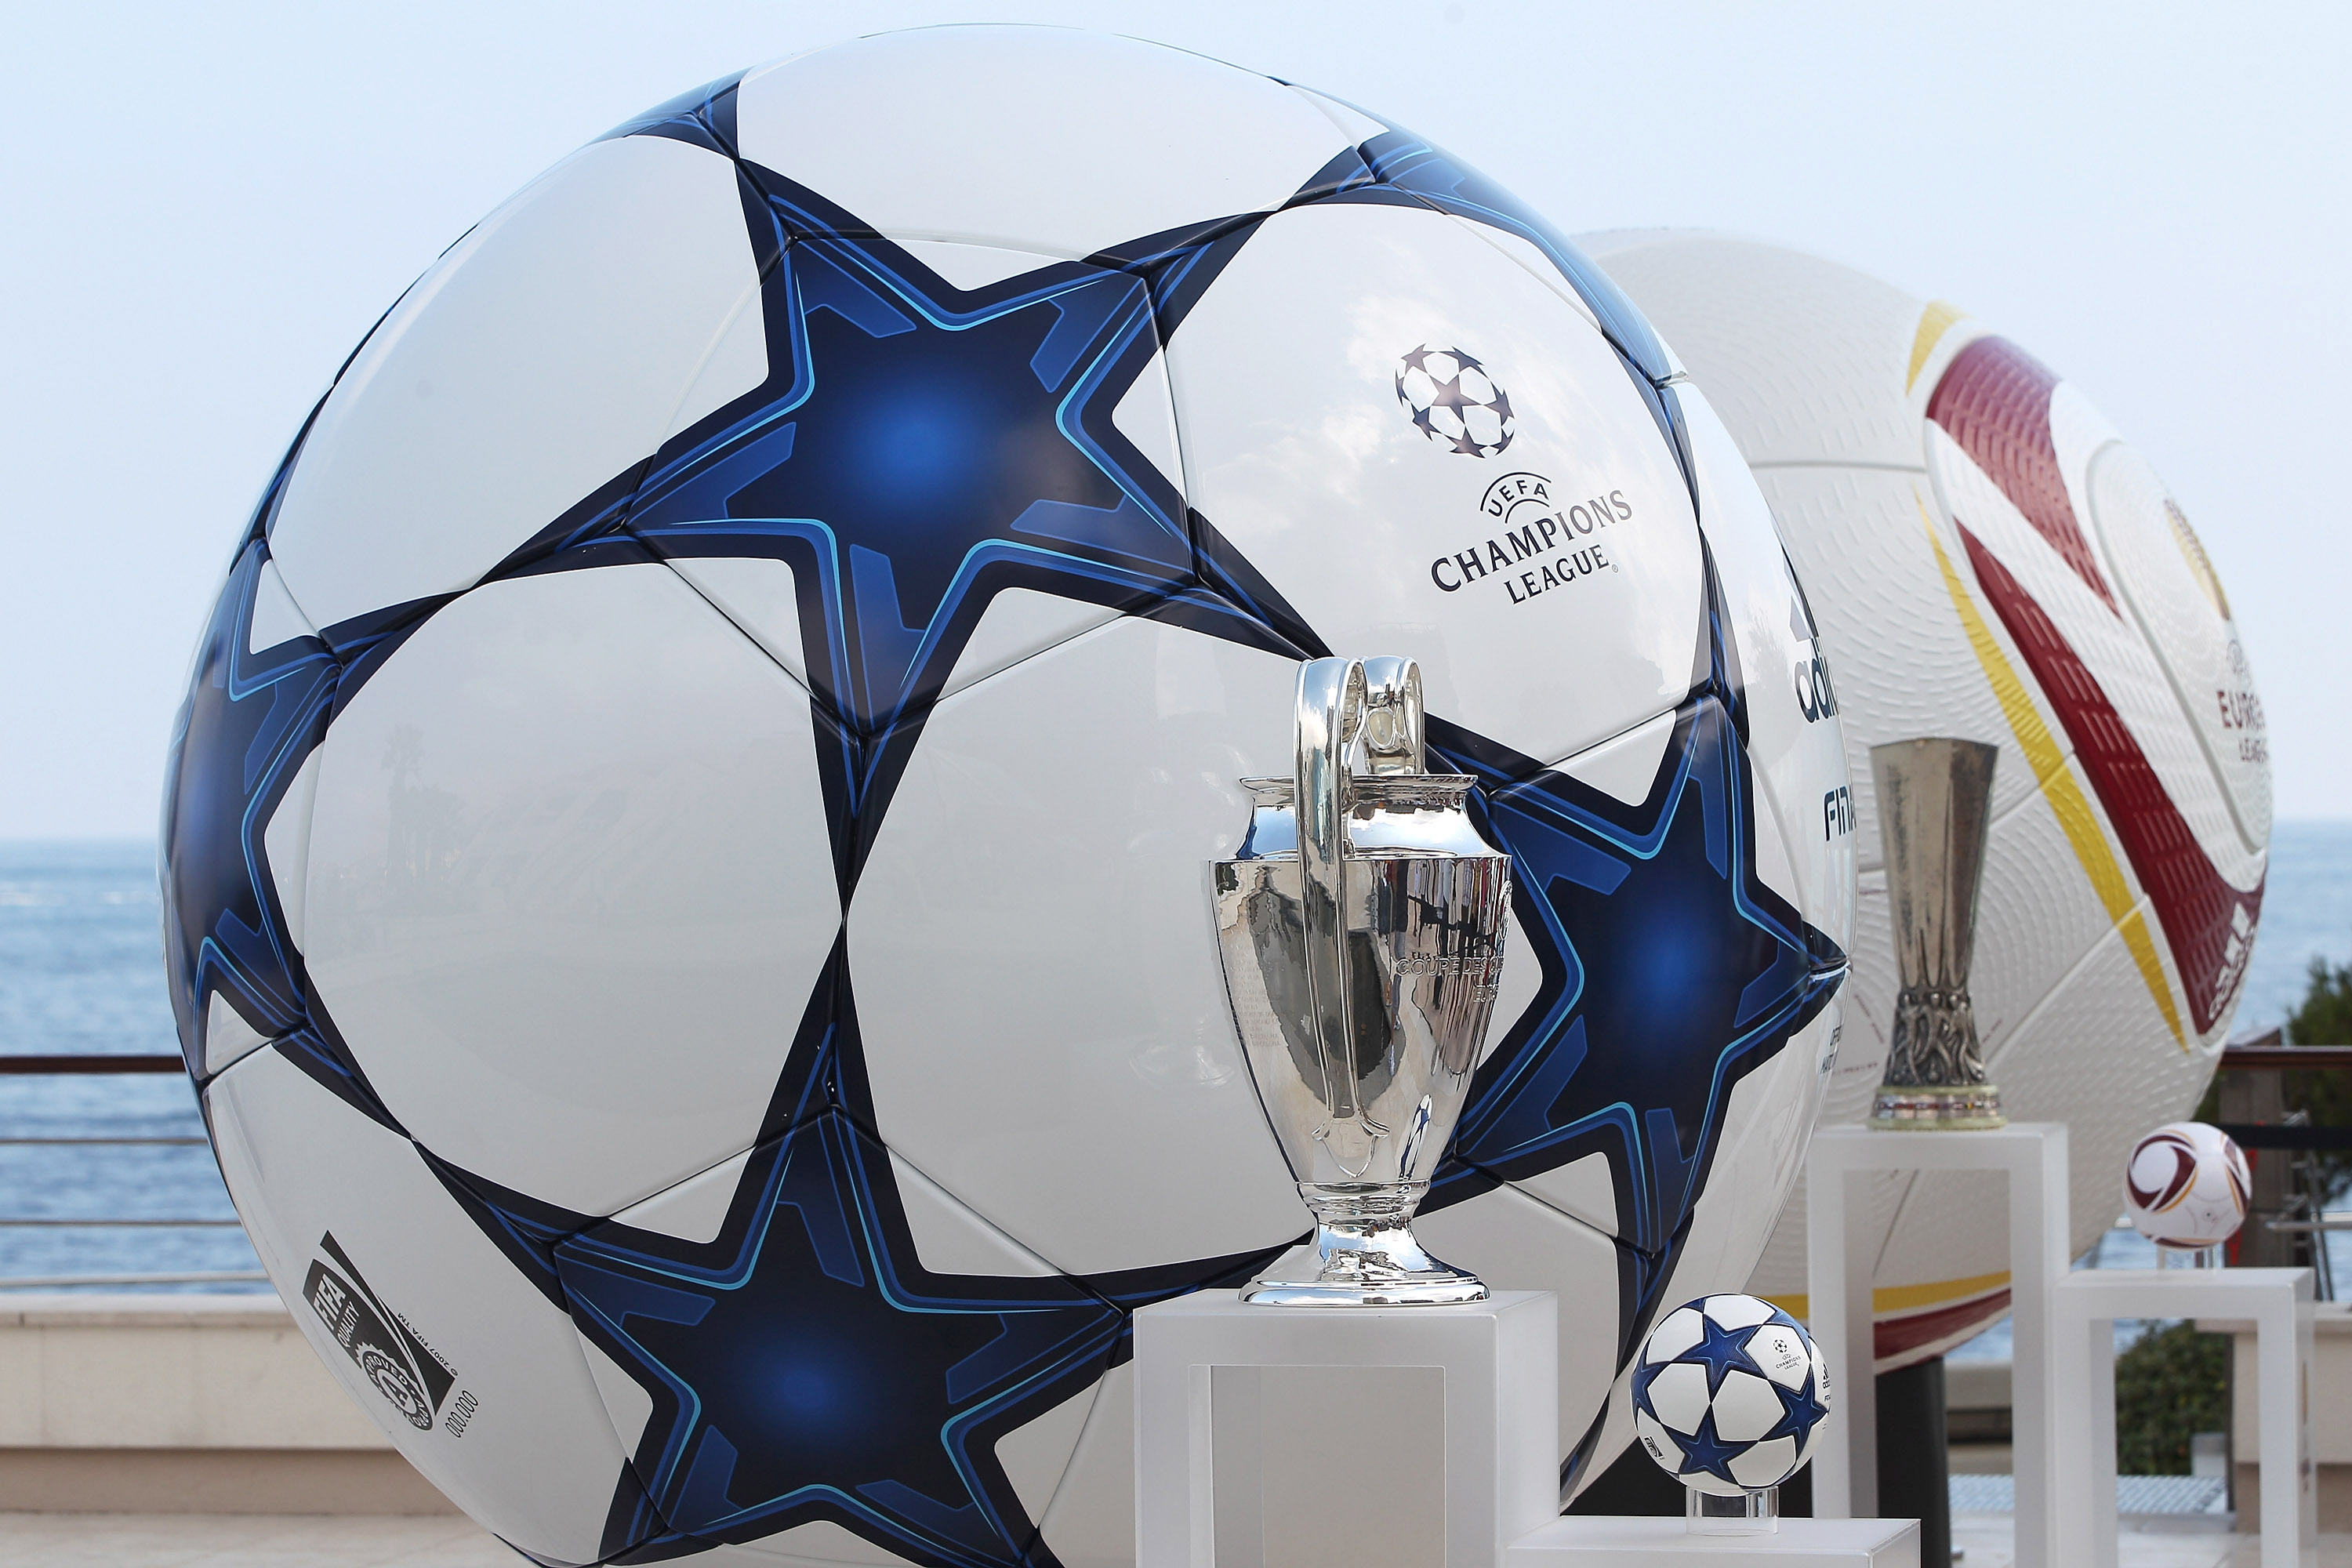 2010-2011 UEFA Champions League (2010)